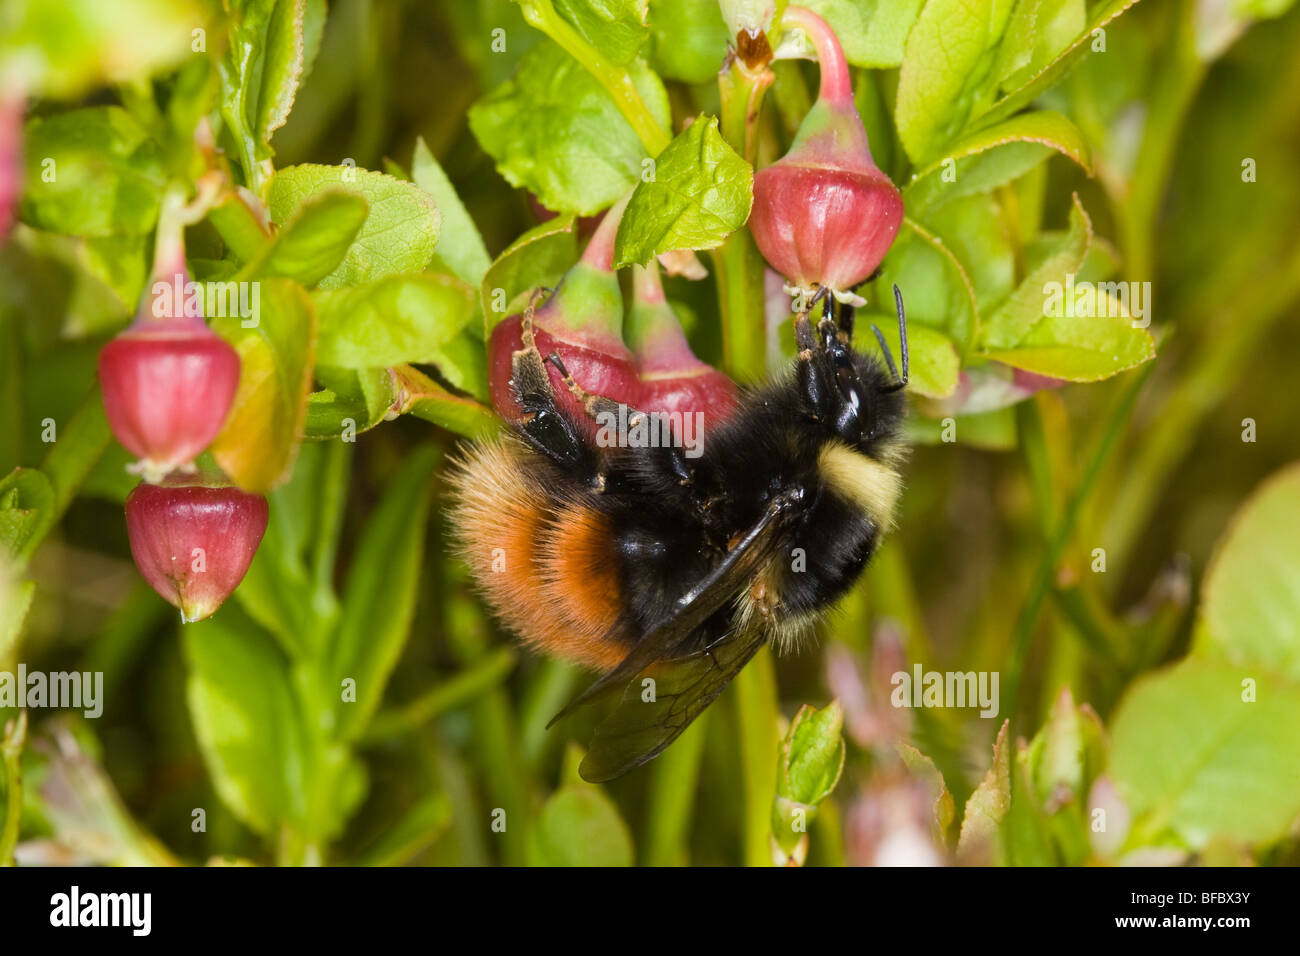 Bilberry Bumblebee, Bombus monticola, visiting Bilberry flower Stock Photo